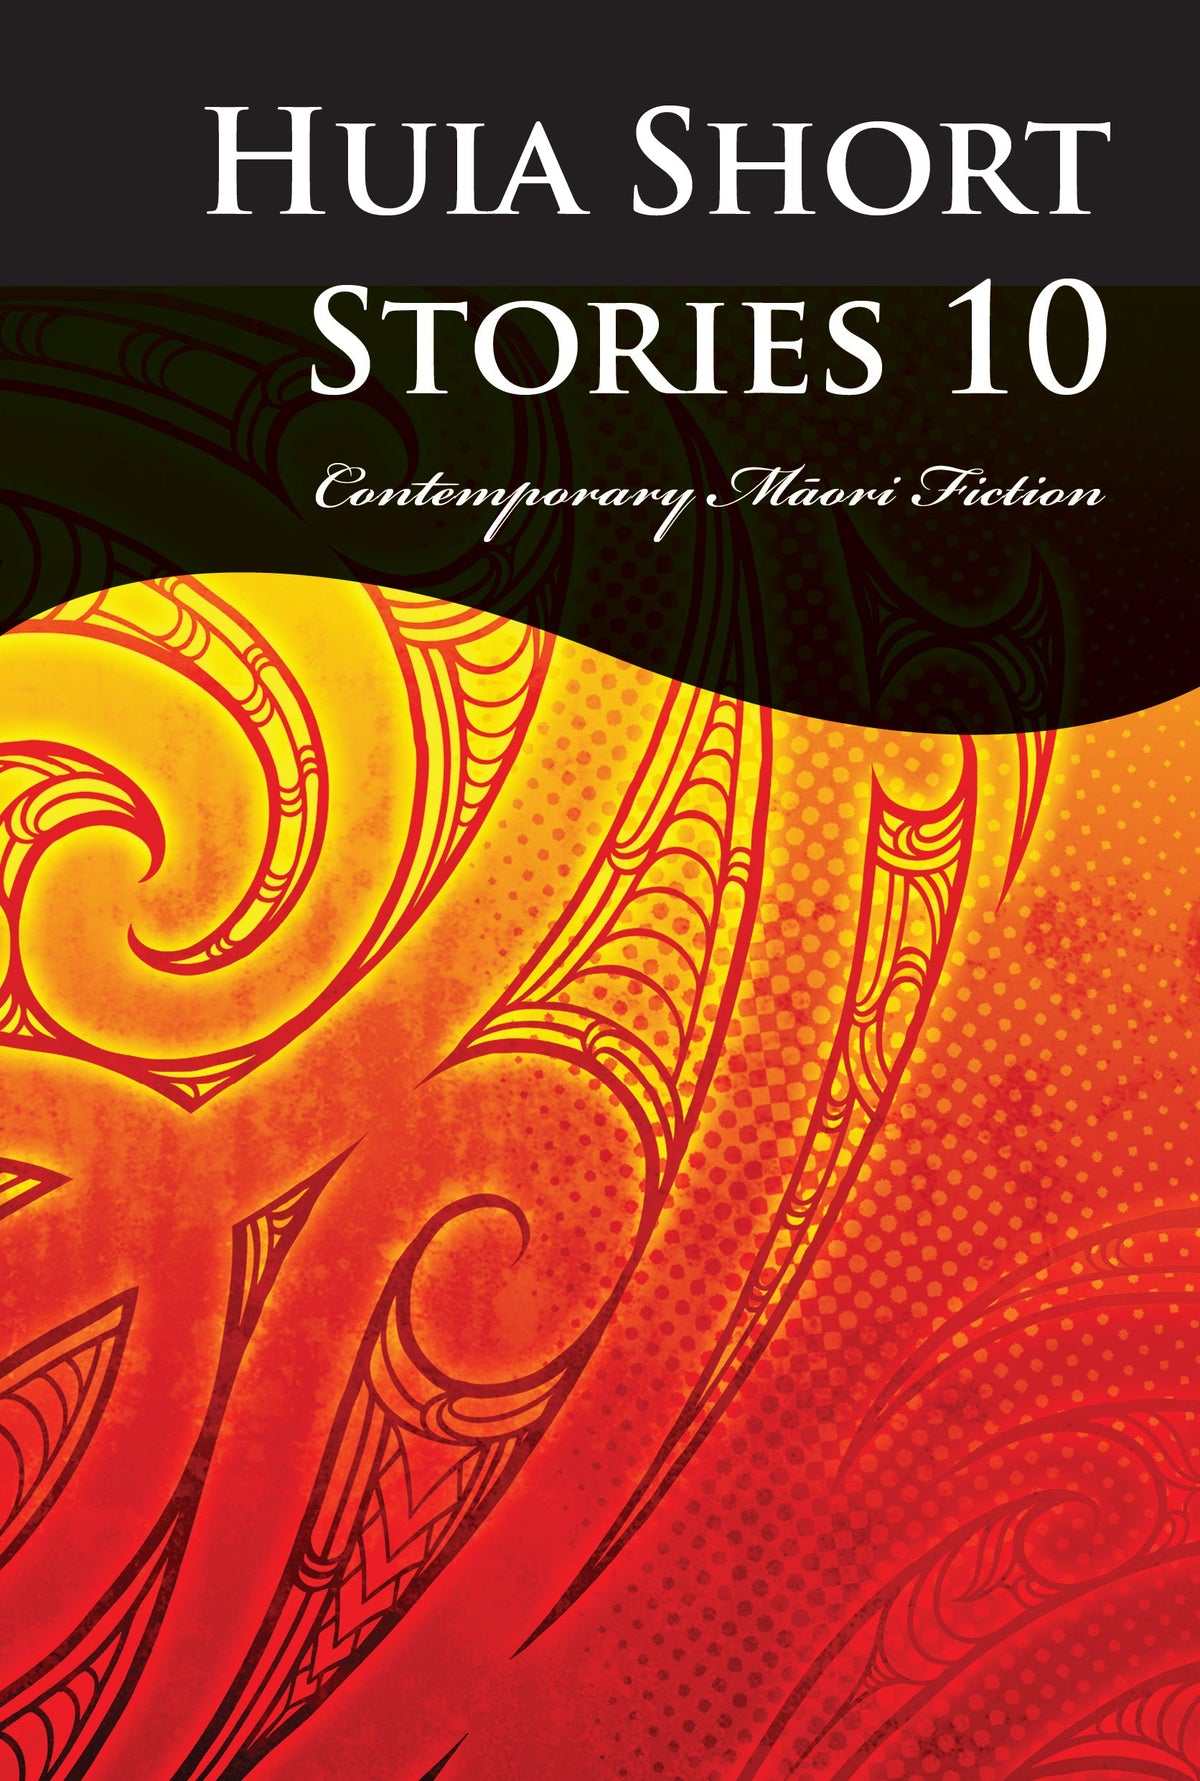 Huia Short Stories 10